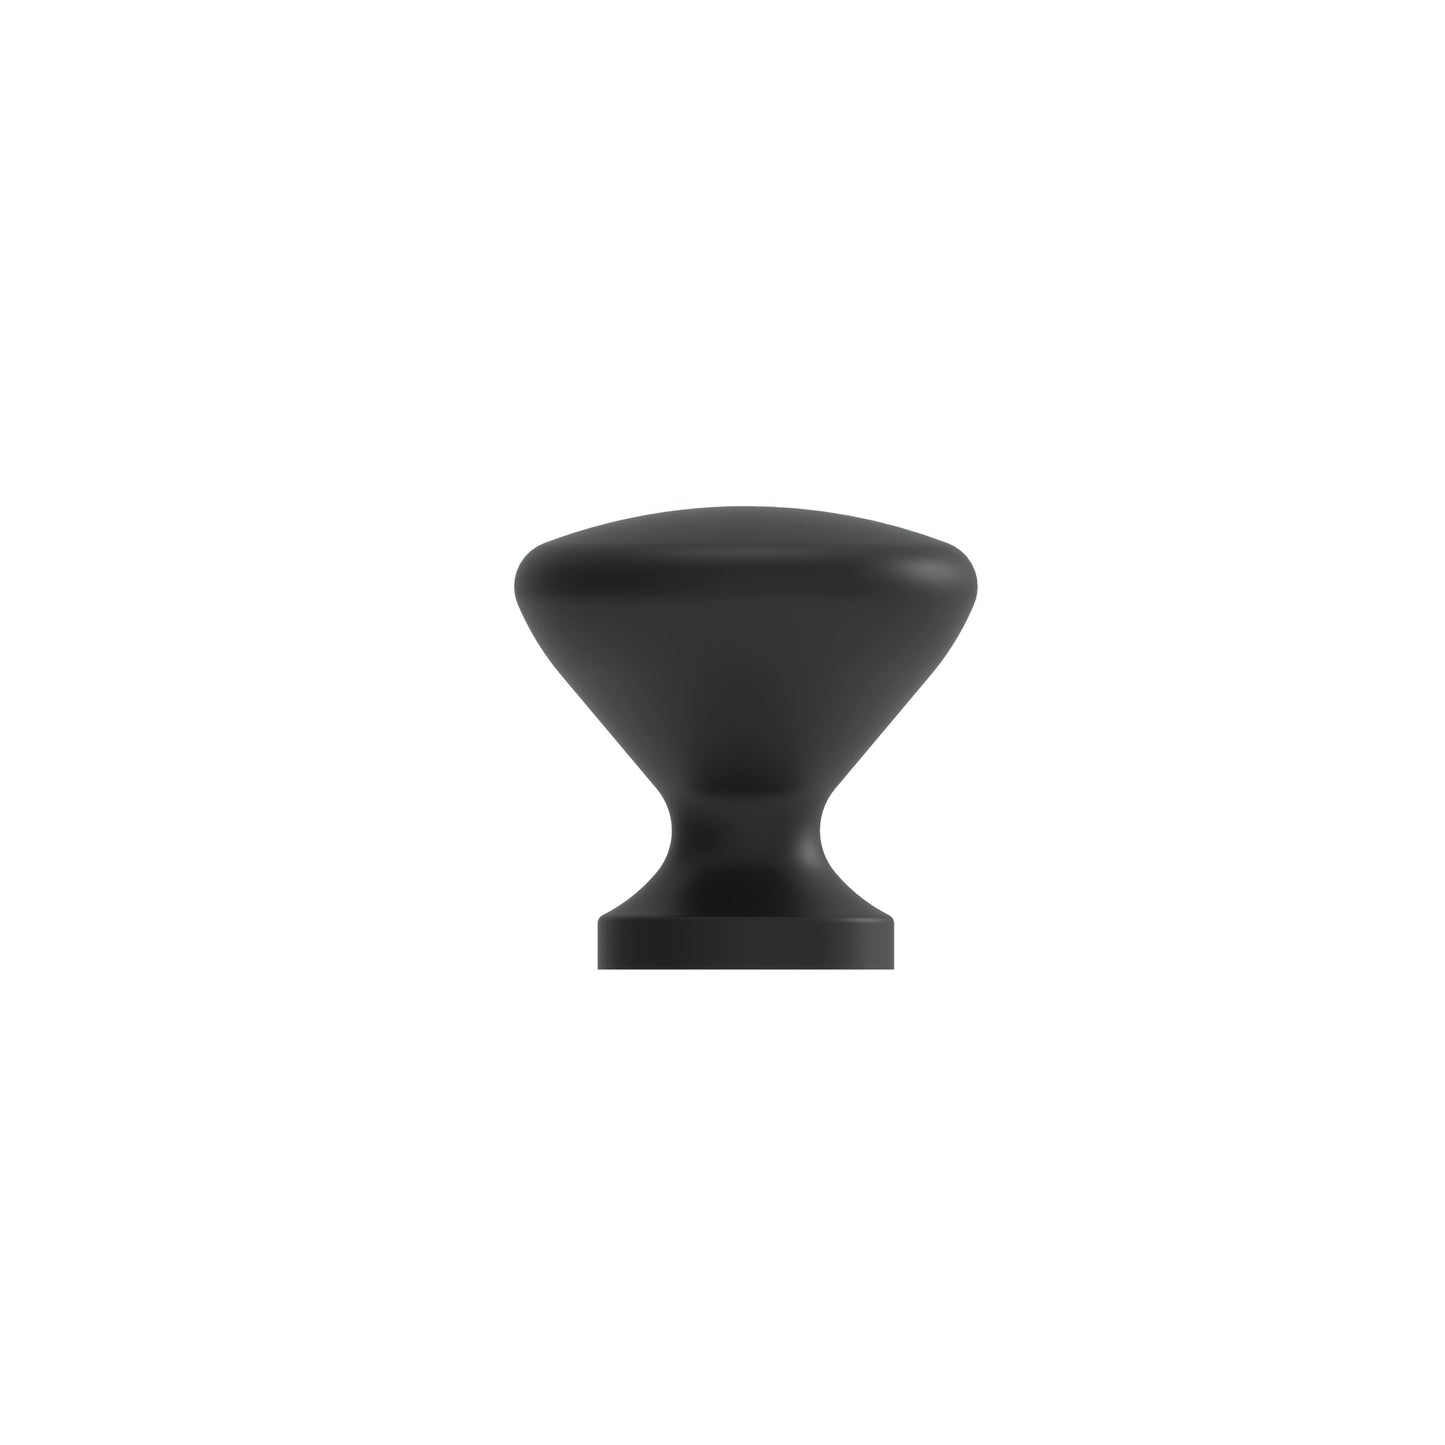 ZEN Design Cup 1" Diameter Matte Black Single Hole Cabinet Knob